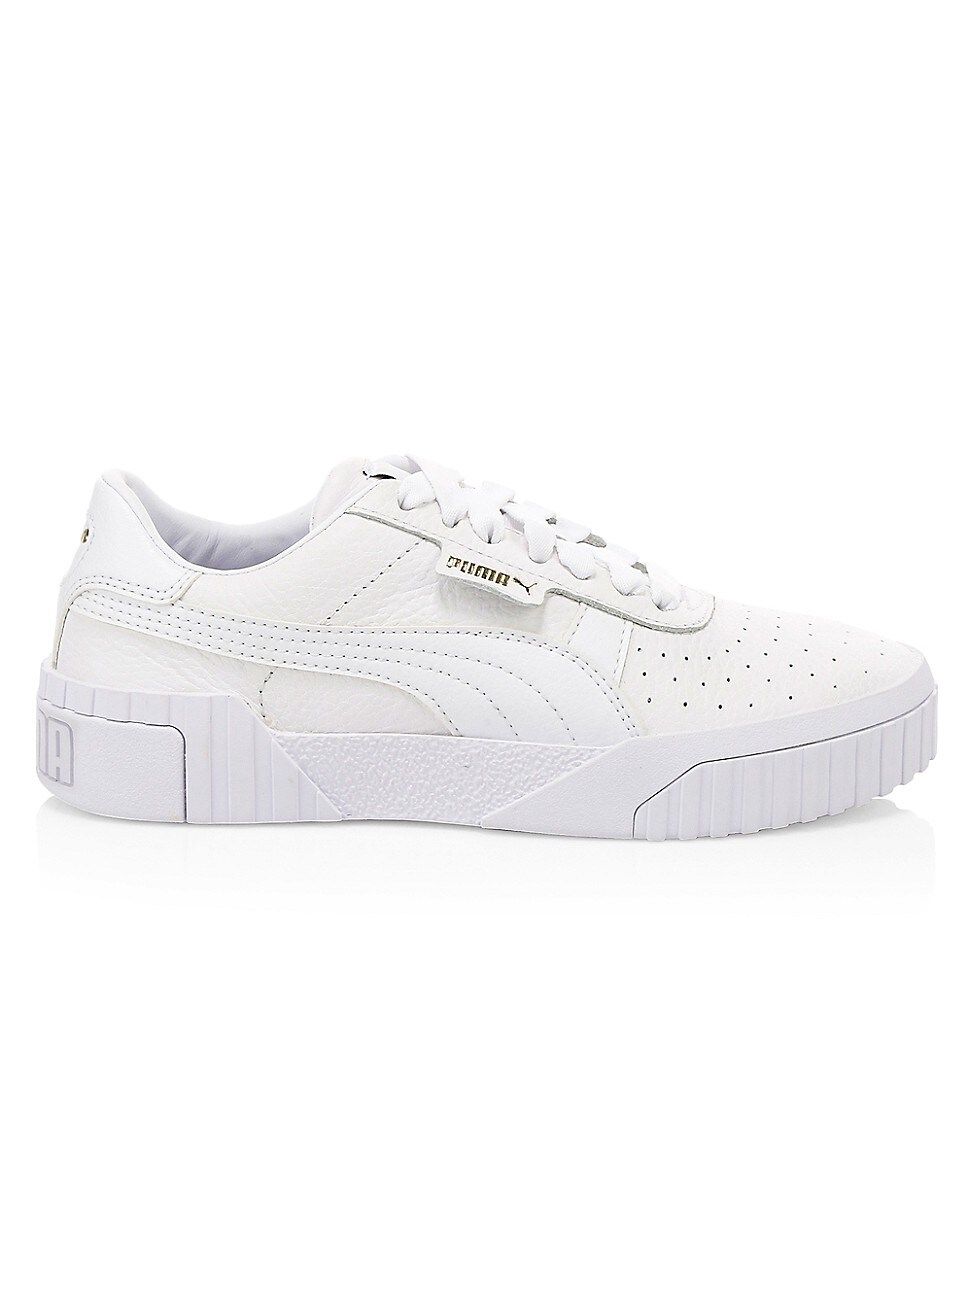 Puma Women's Women's Cali Leather Platform Sneakers - Puma White - Size 8 | Saks Fifth Avenue